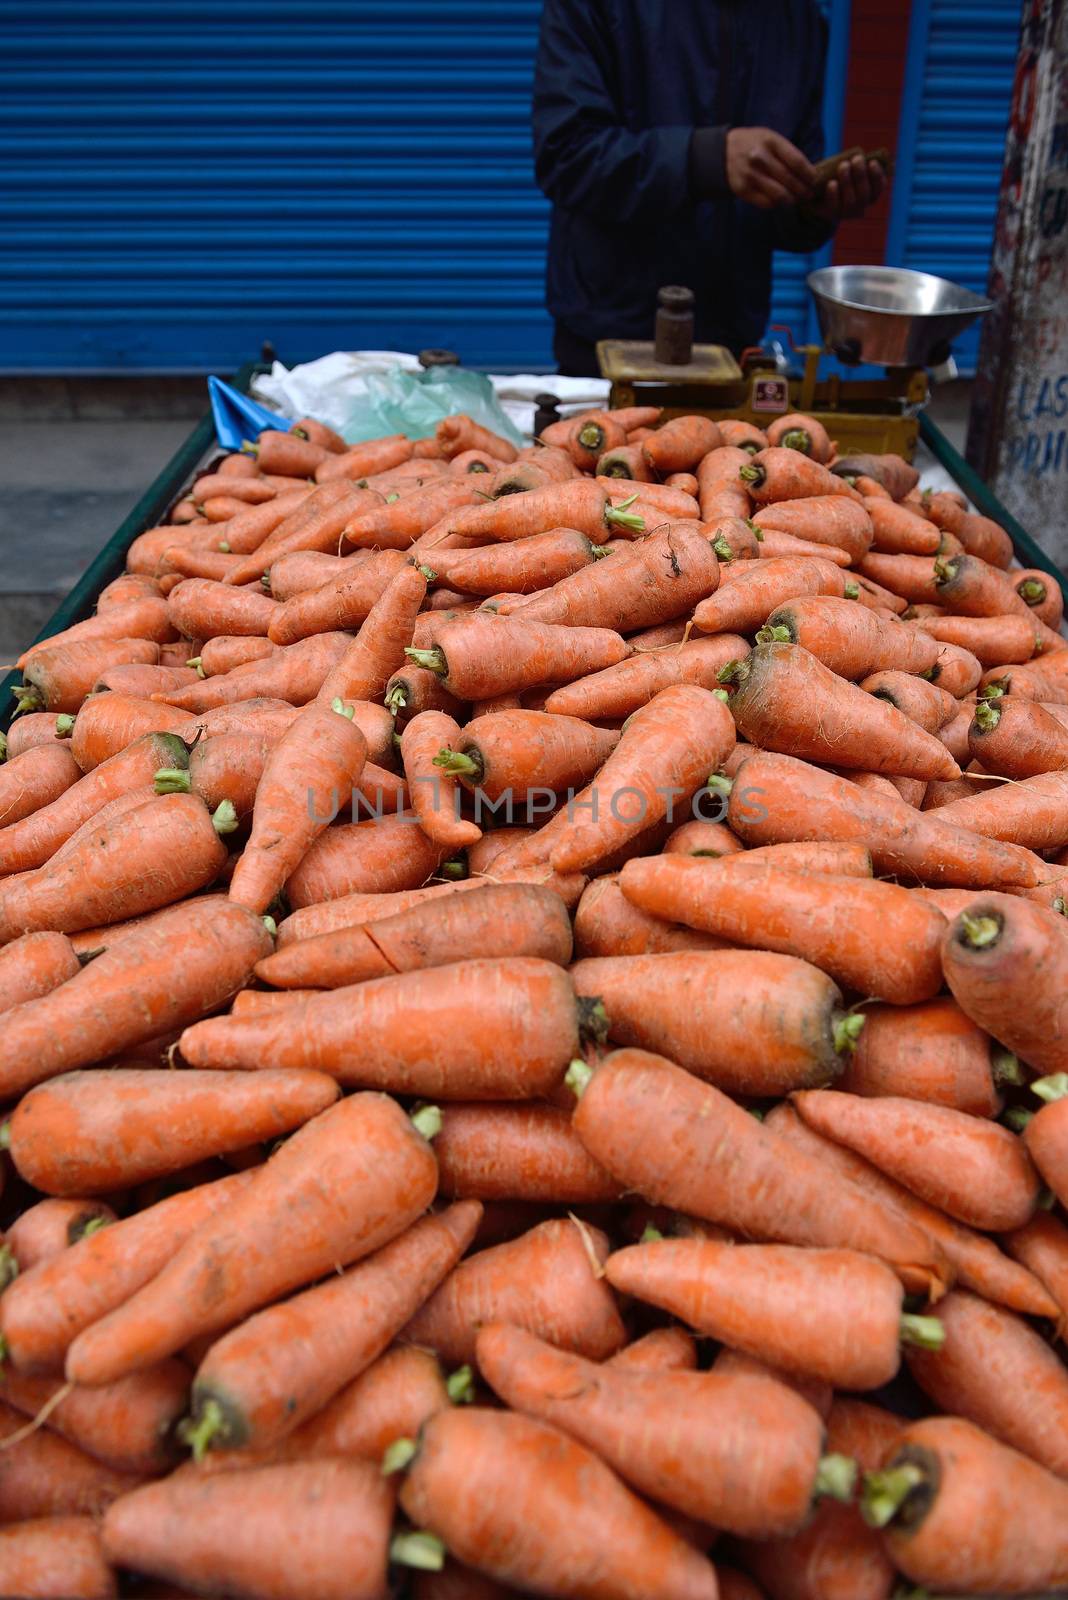 carrot in market scene near Boudha Nath (Bodhnath) stupa, kathm by think4photop